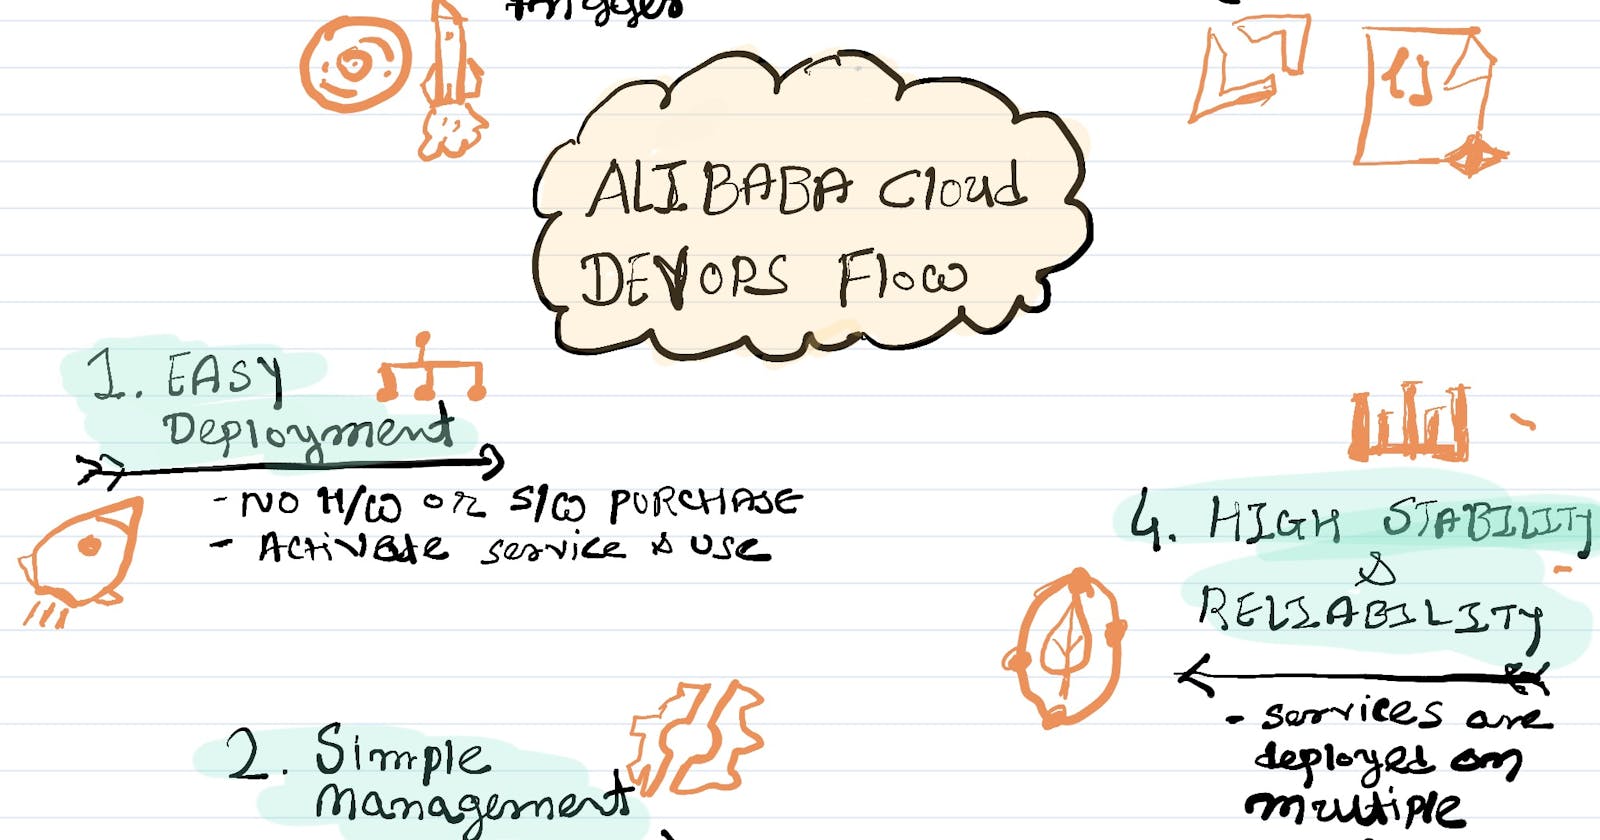 [01/2022] Alibaba Cloud DevOps Pipeline (Flow): Managed enterprise-grade DevOps Service